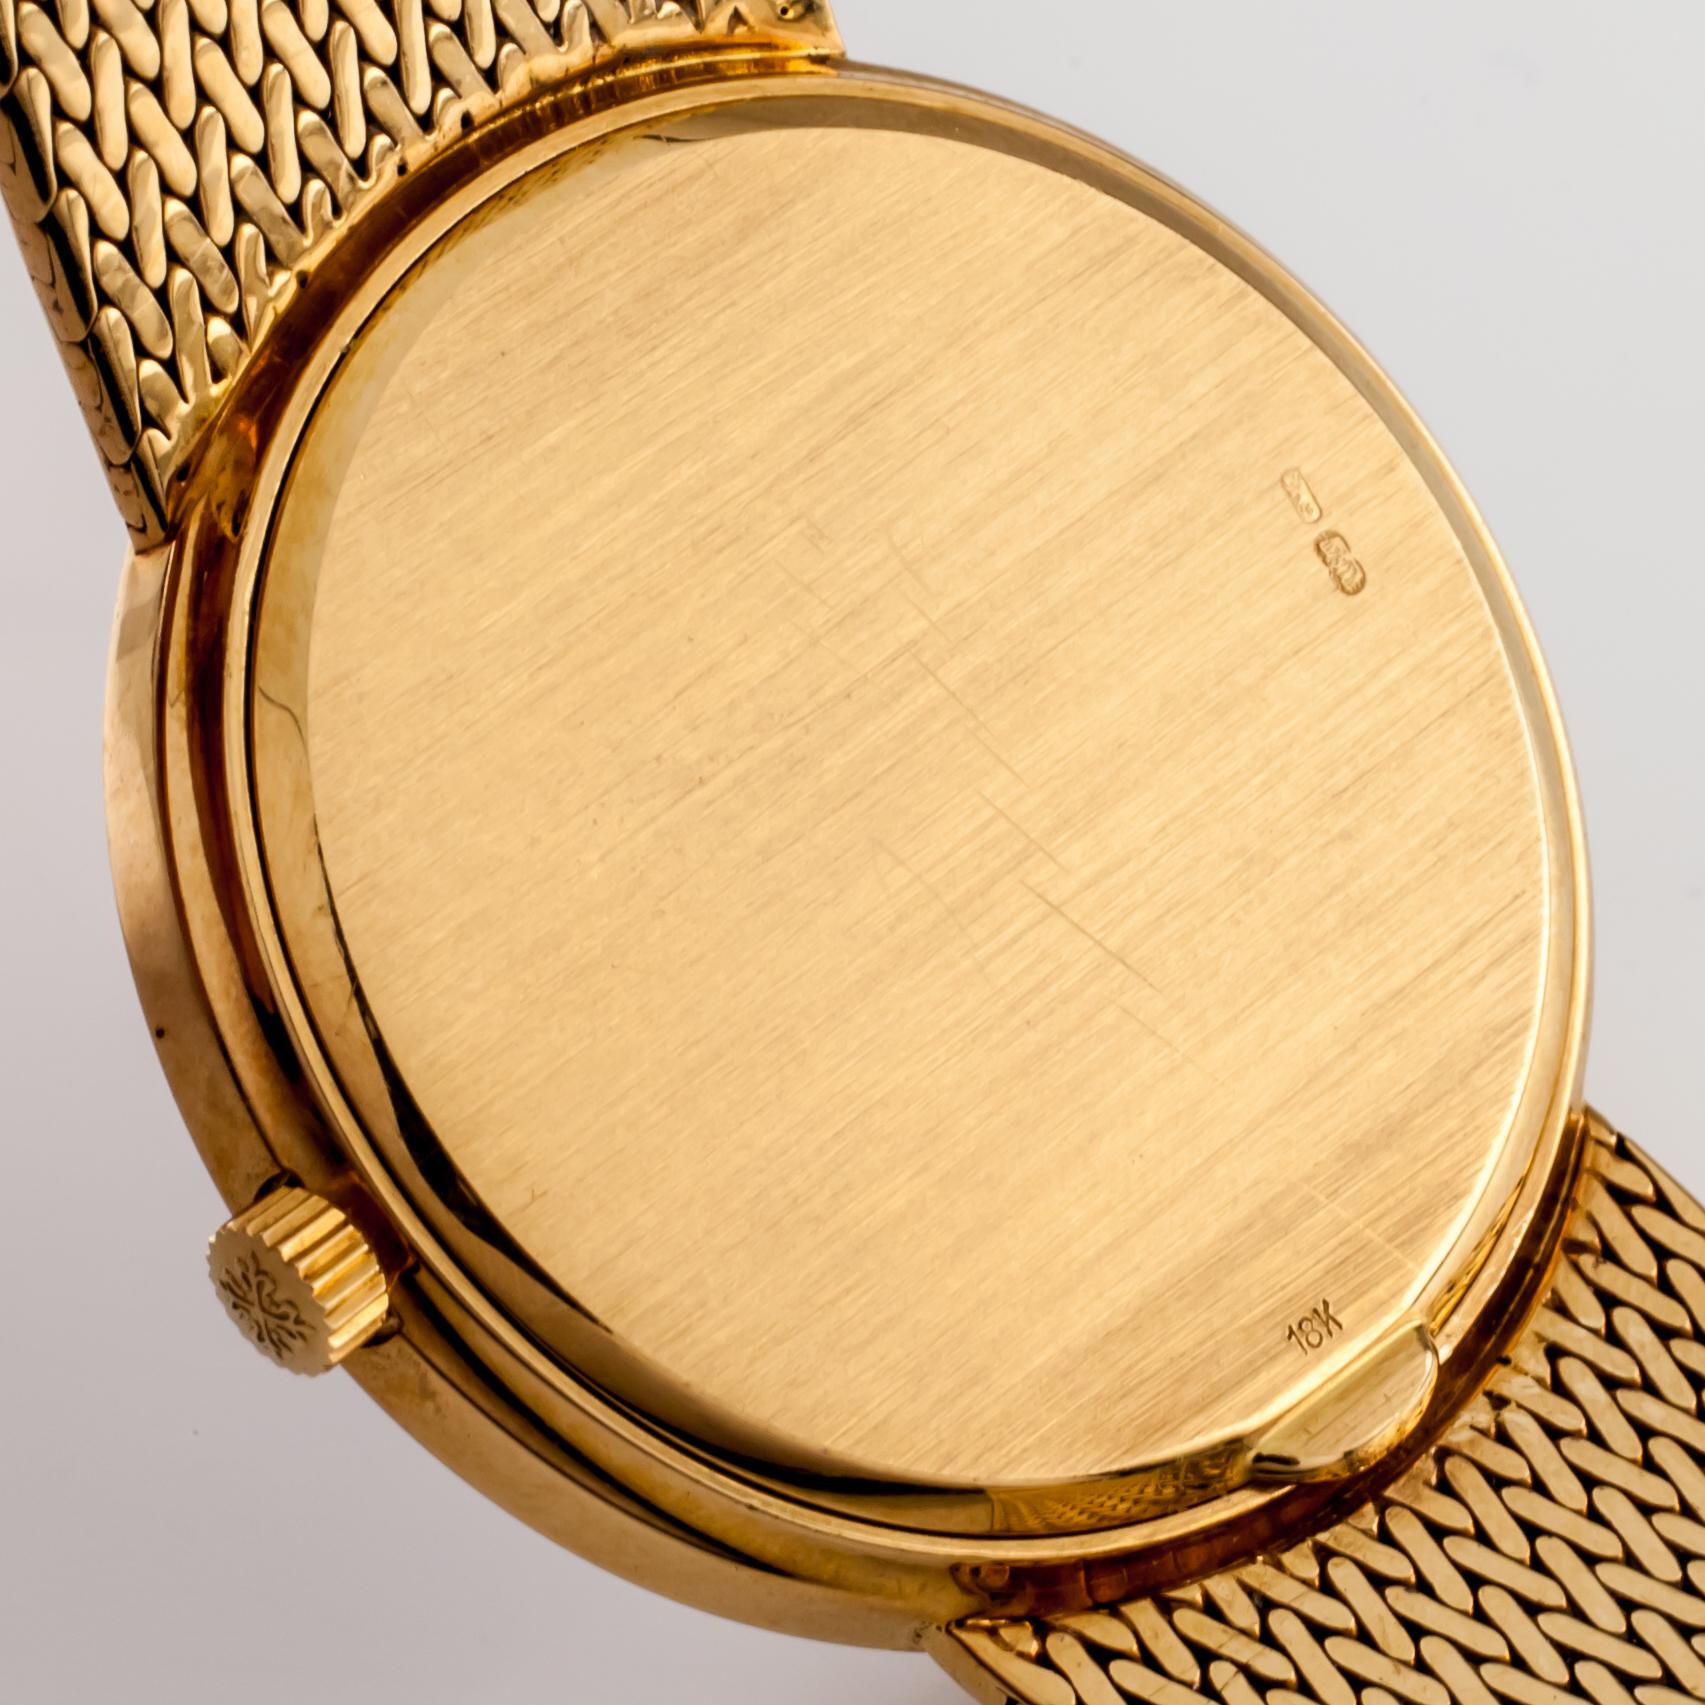 Patek Philippe 18 Karat Yellow Gold Calatrava Men's Quartz Watch with Box 3954 2